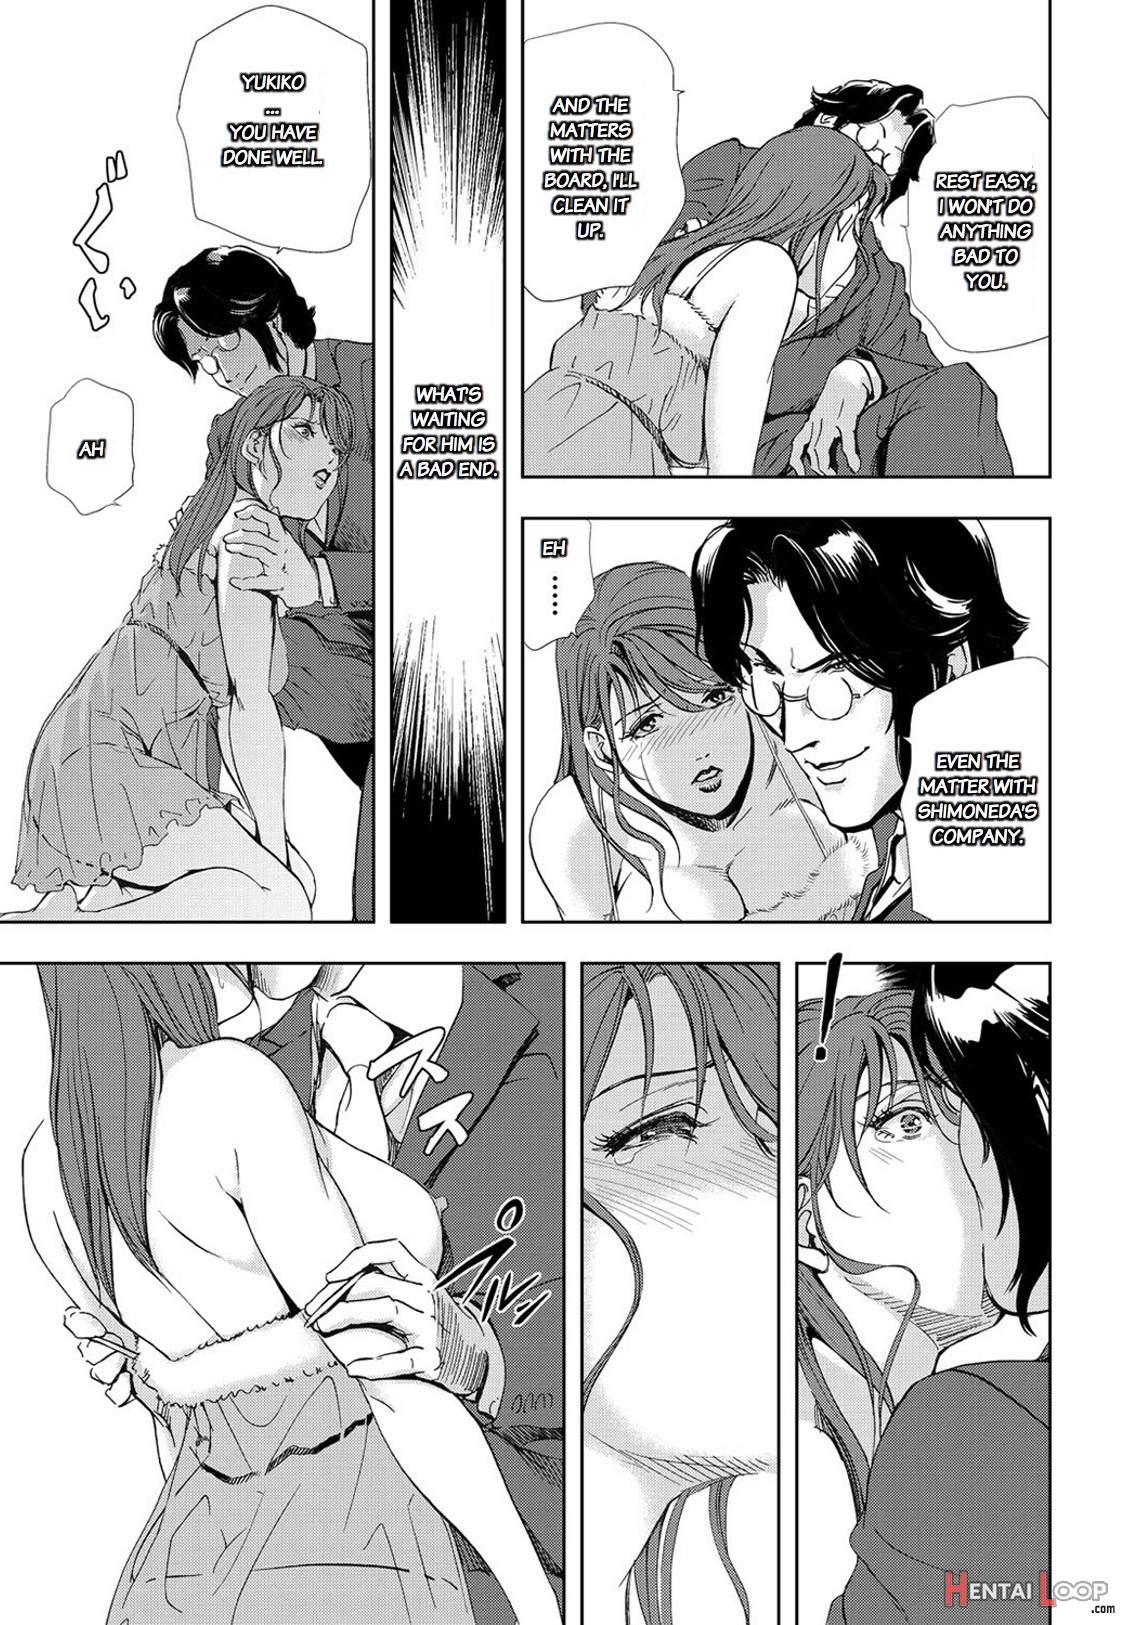 Nikuhisyo Yukiko Chapter 25-2 page 23